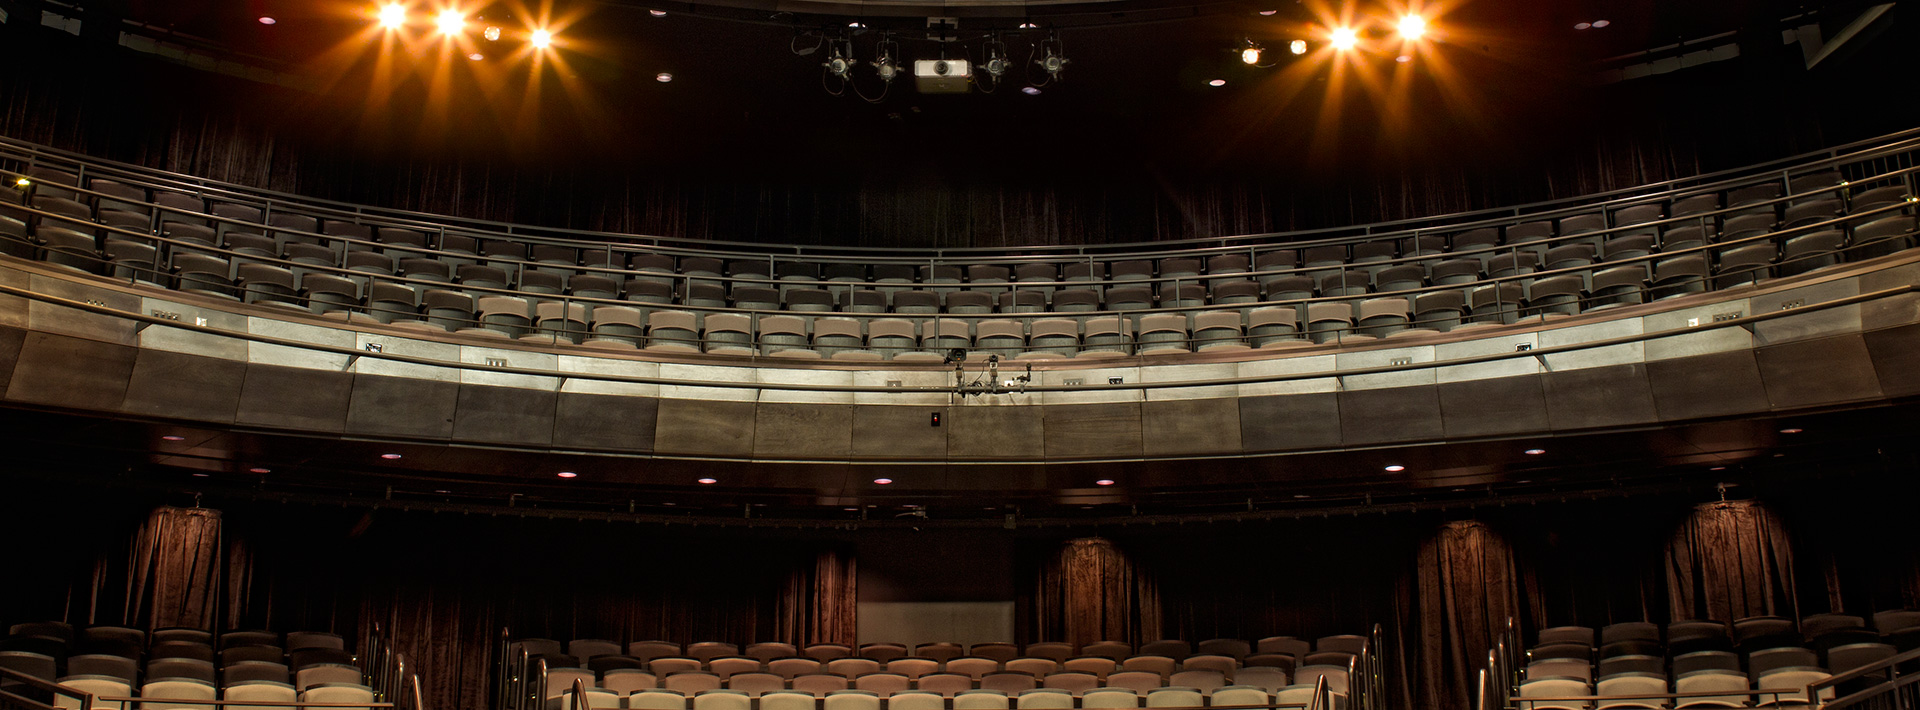 Donnell-Theatre-BGSU8800-seats